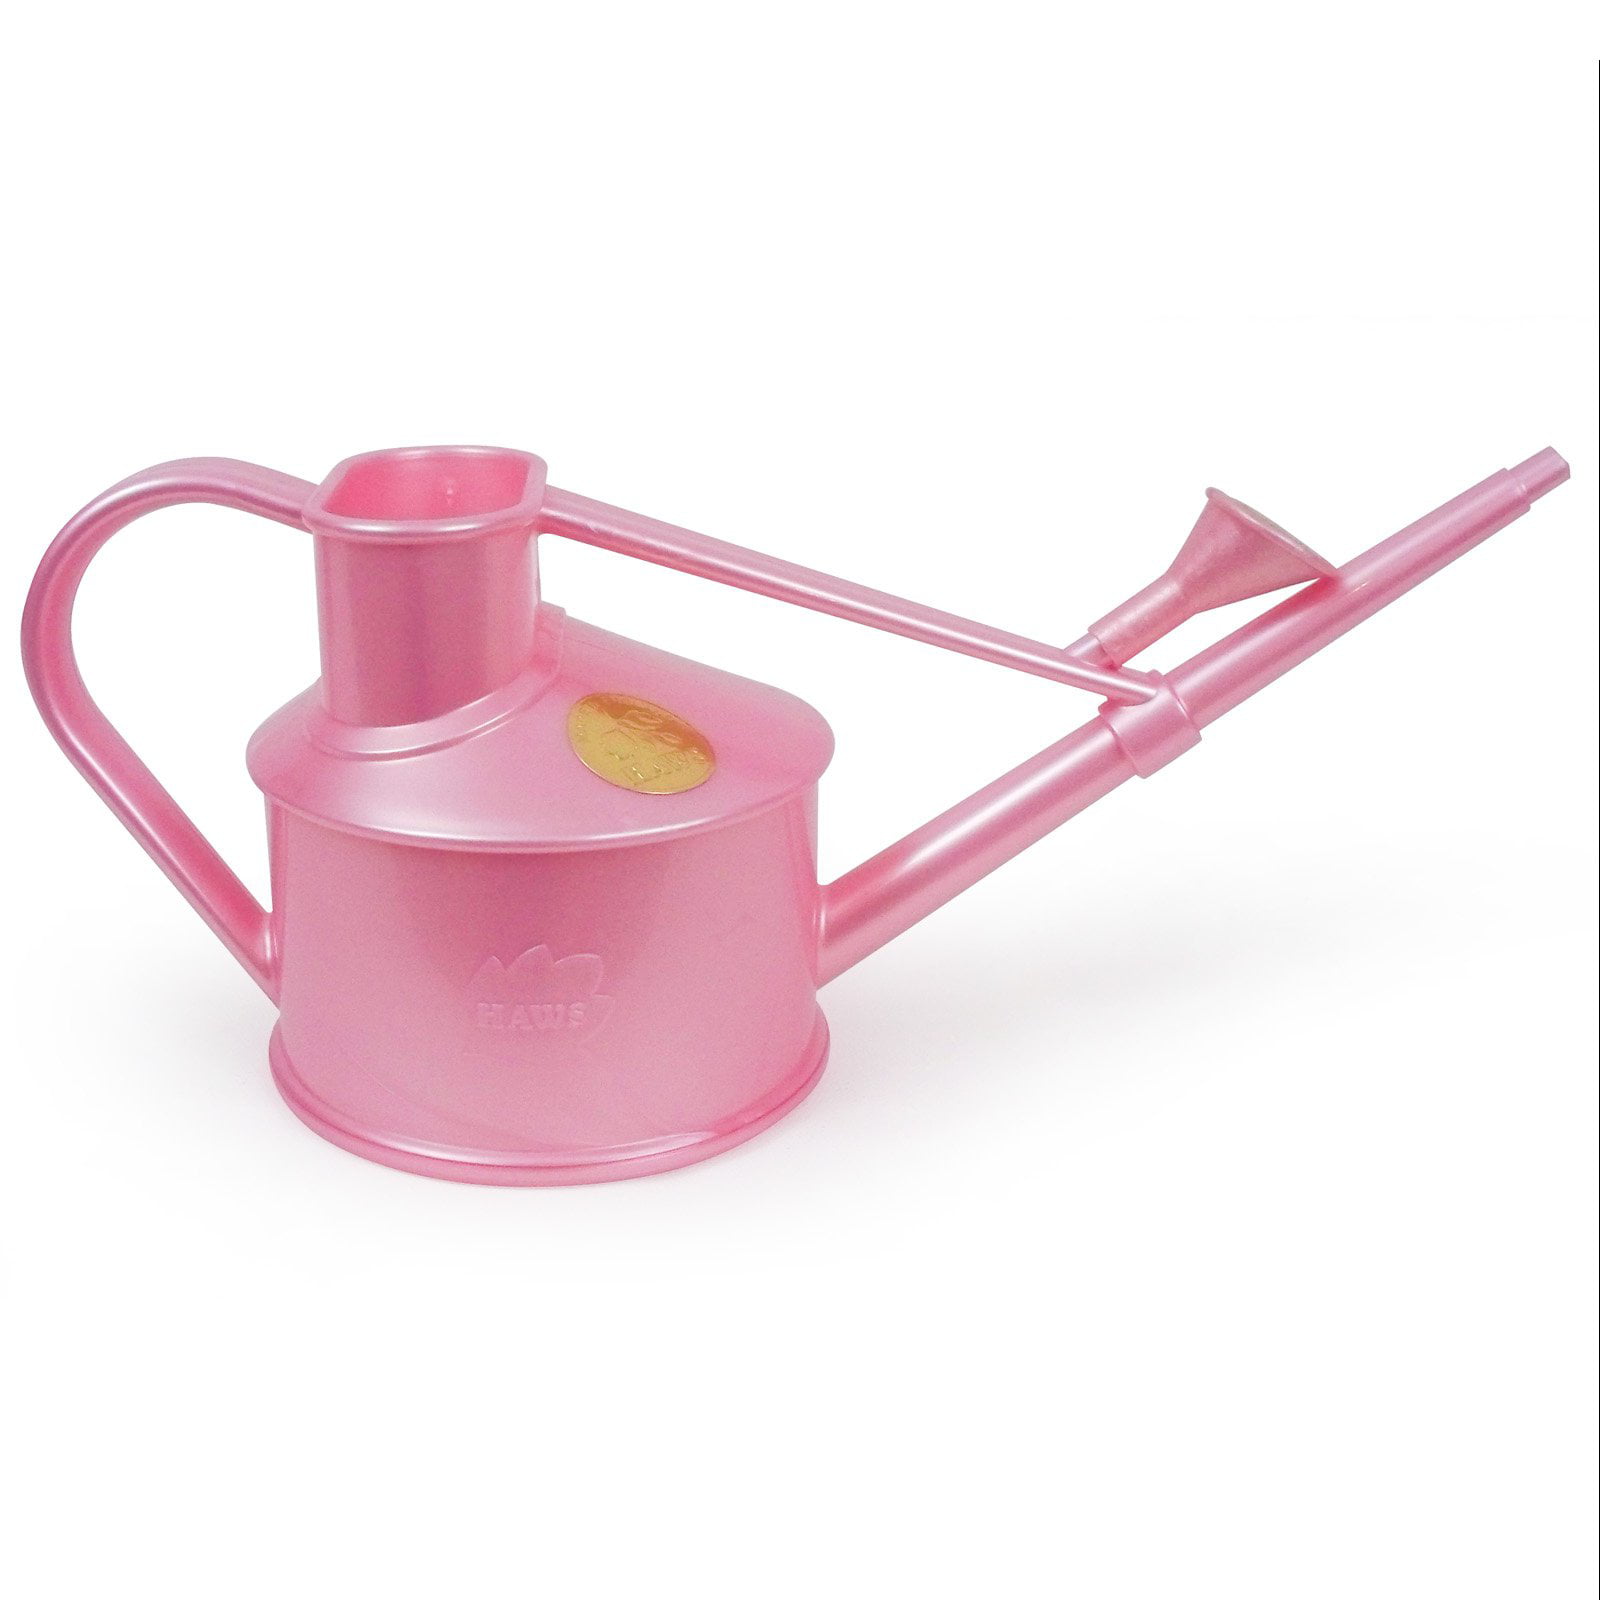 HAWS Handy 0.7L Bright Pink Indoor Watering Can